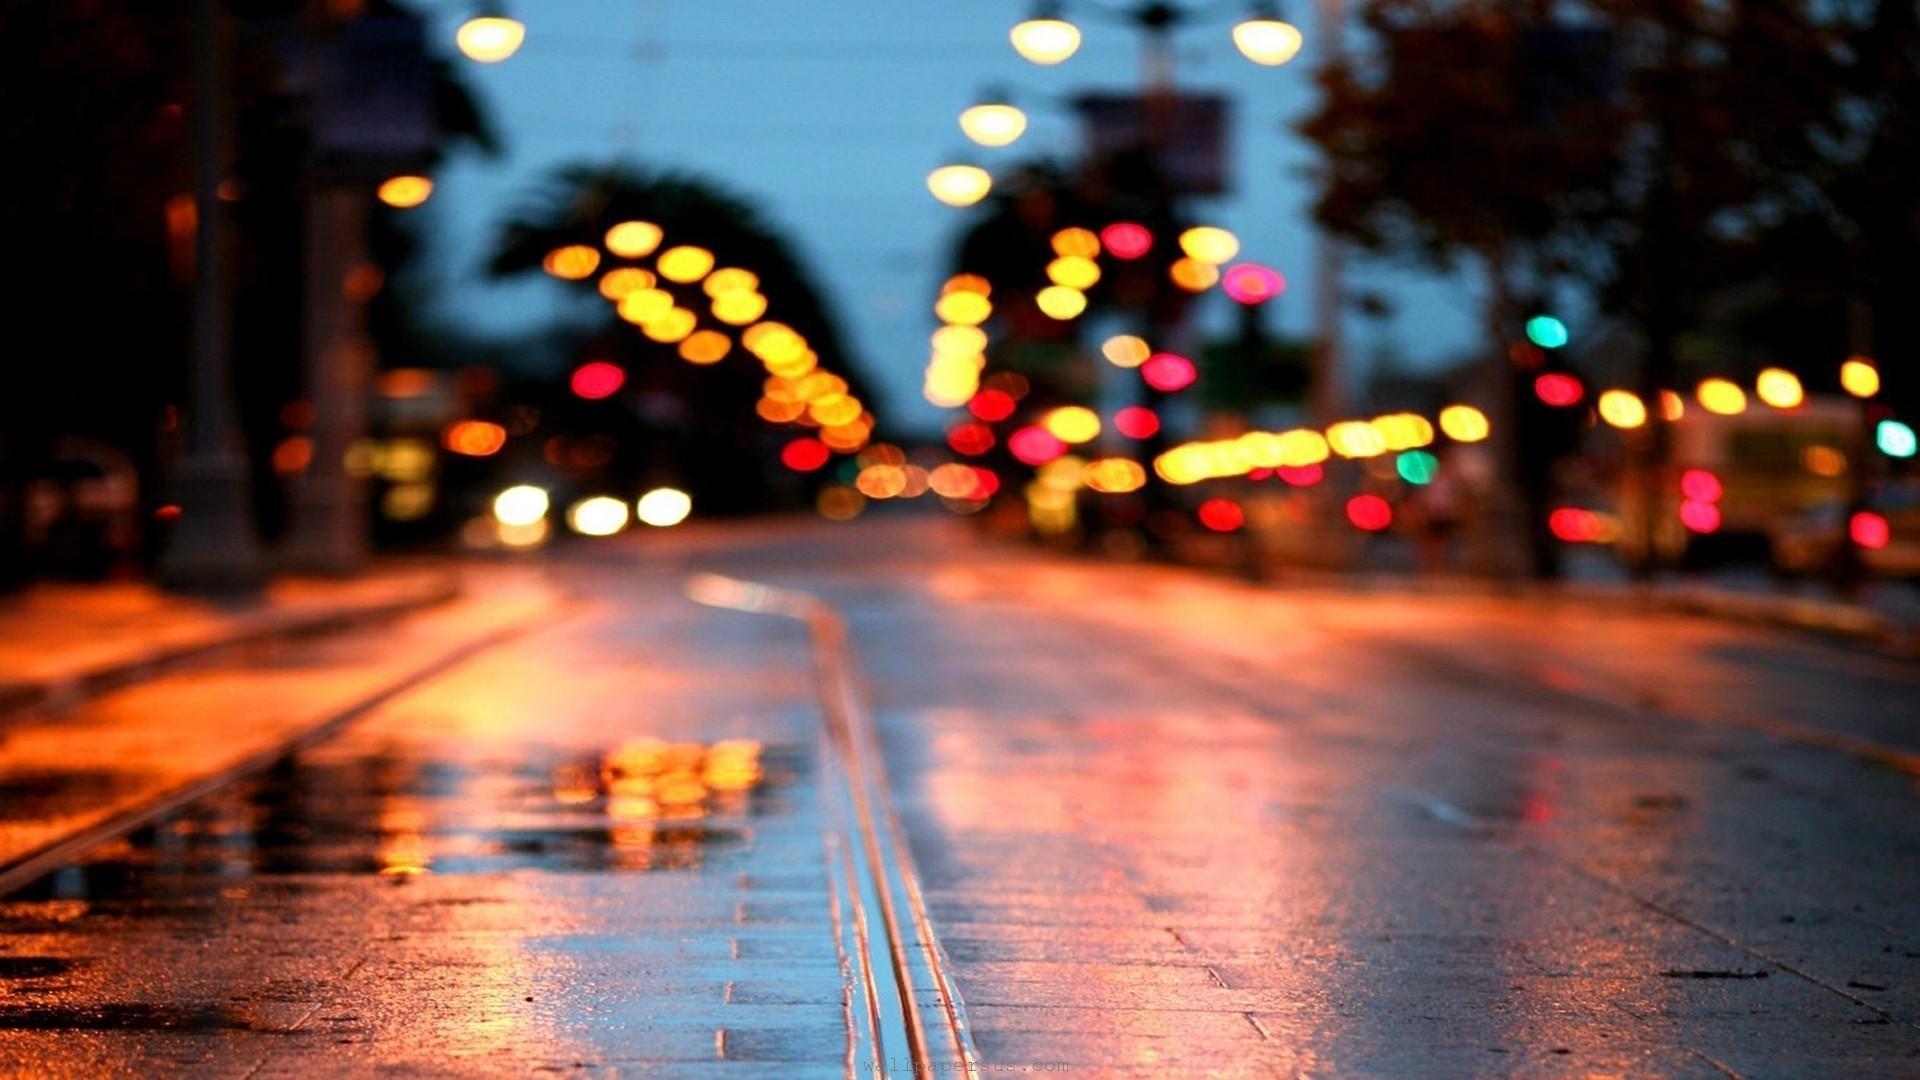 City Rain Photography Picture